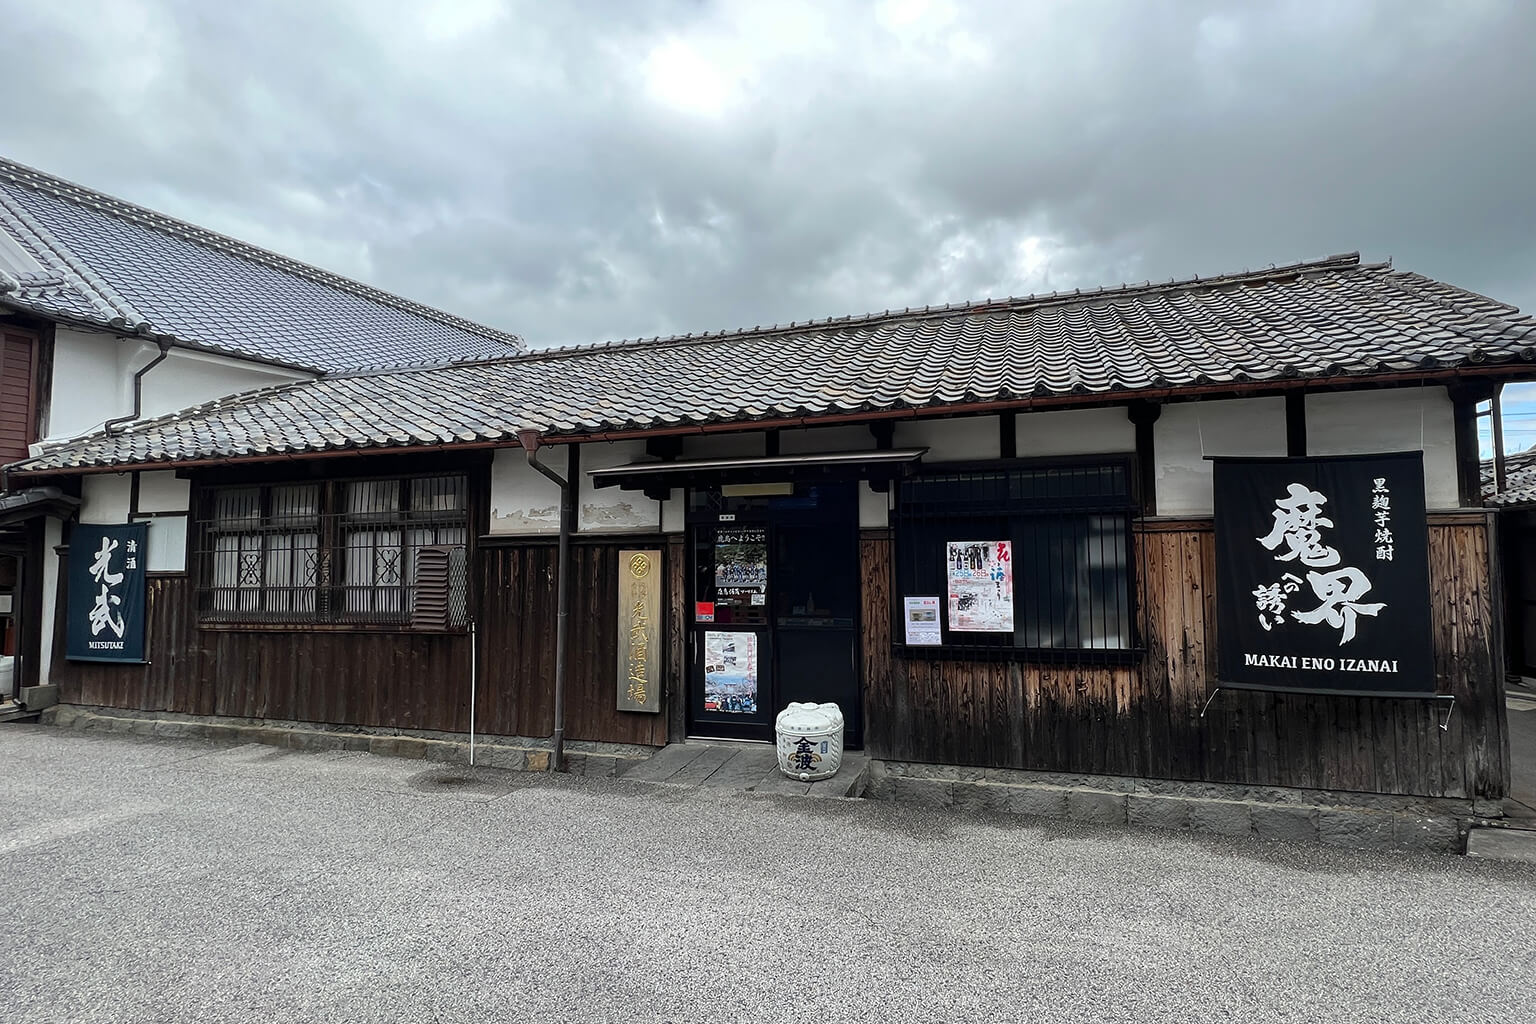 Mitsutake Brewing Company is located in Kashima, Saga prefecture